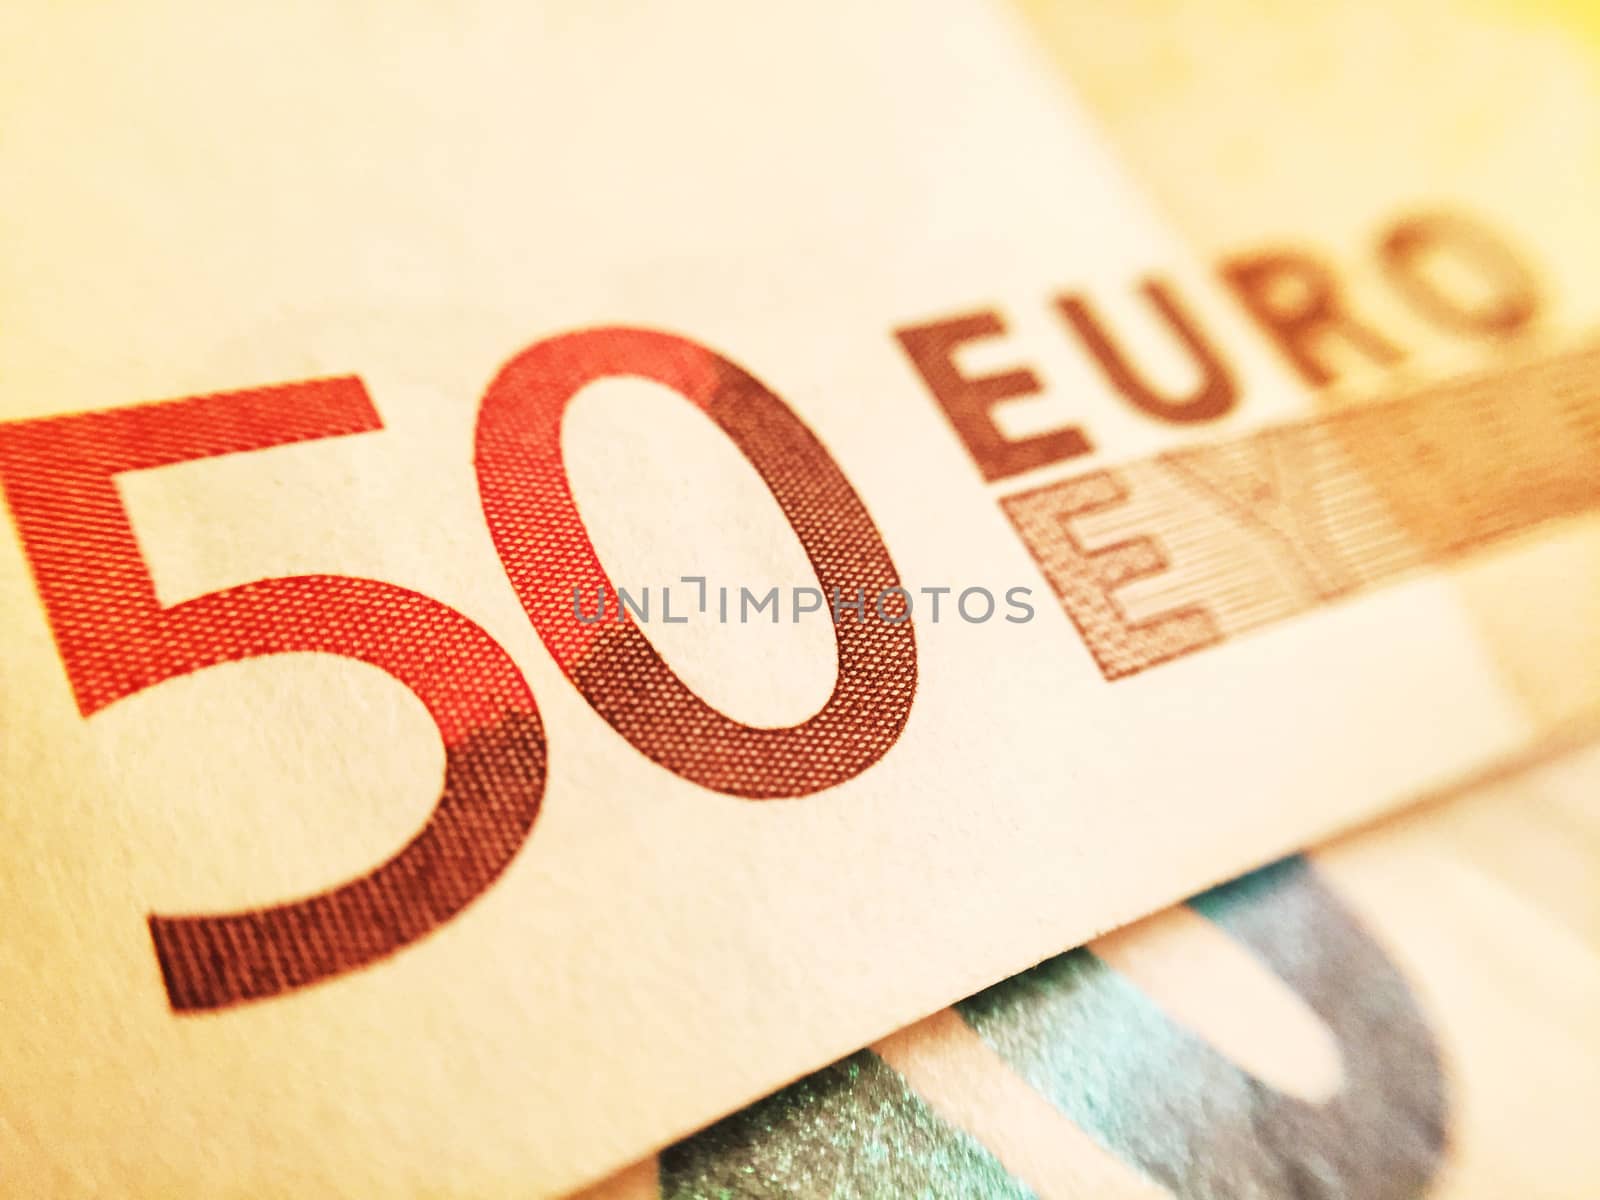 Fifty euro banknote by rarrarorro